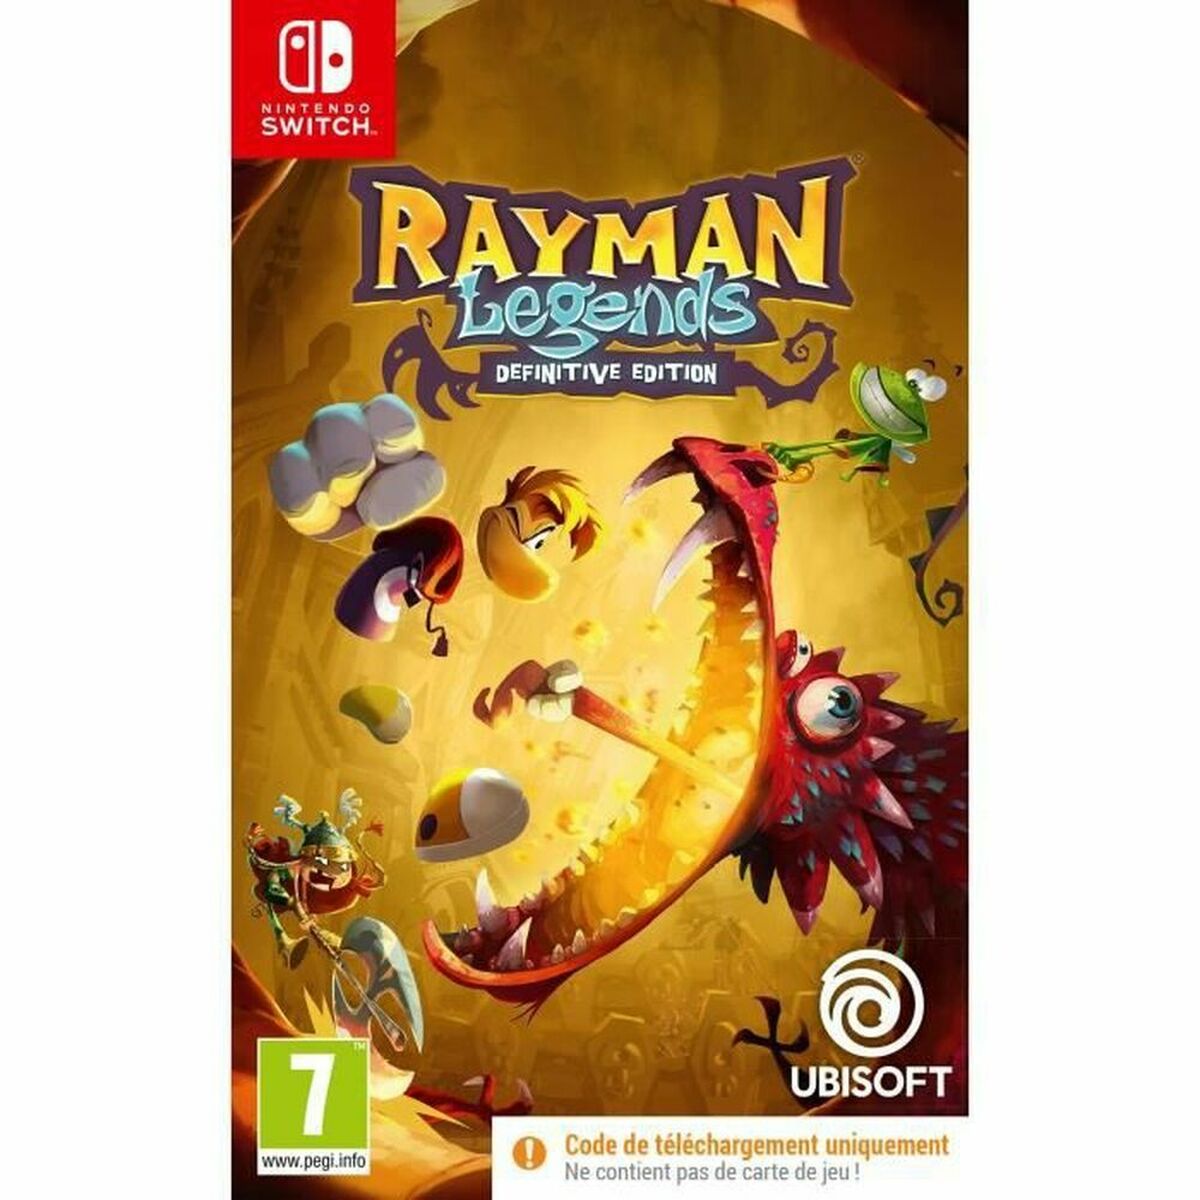 Videogioco per Switch Ubisoft Rayman Legends Definitive Edition Codice download